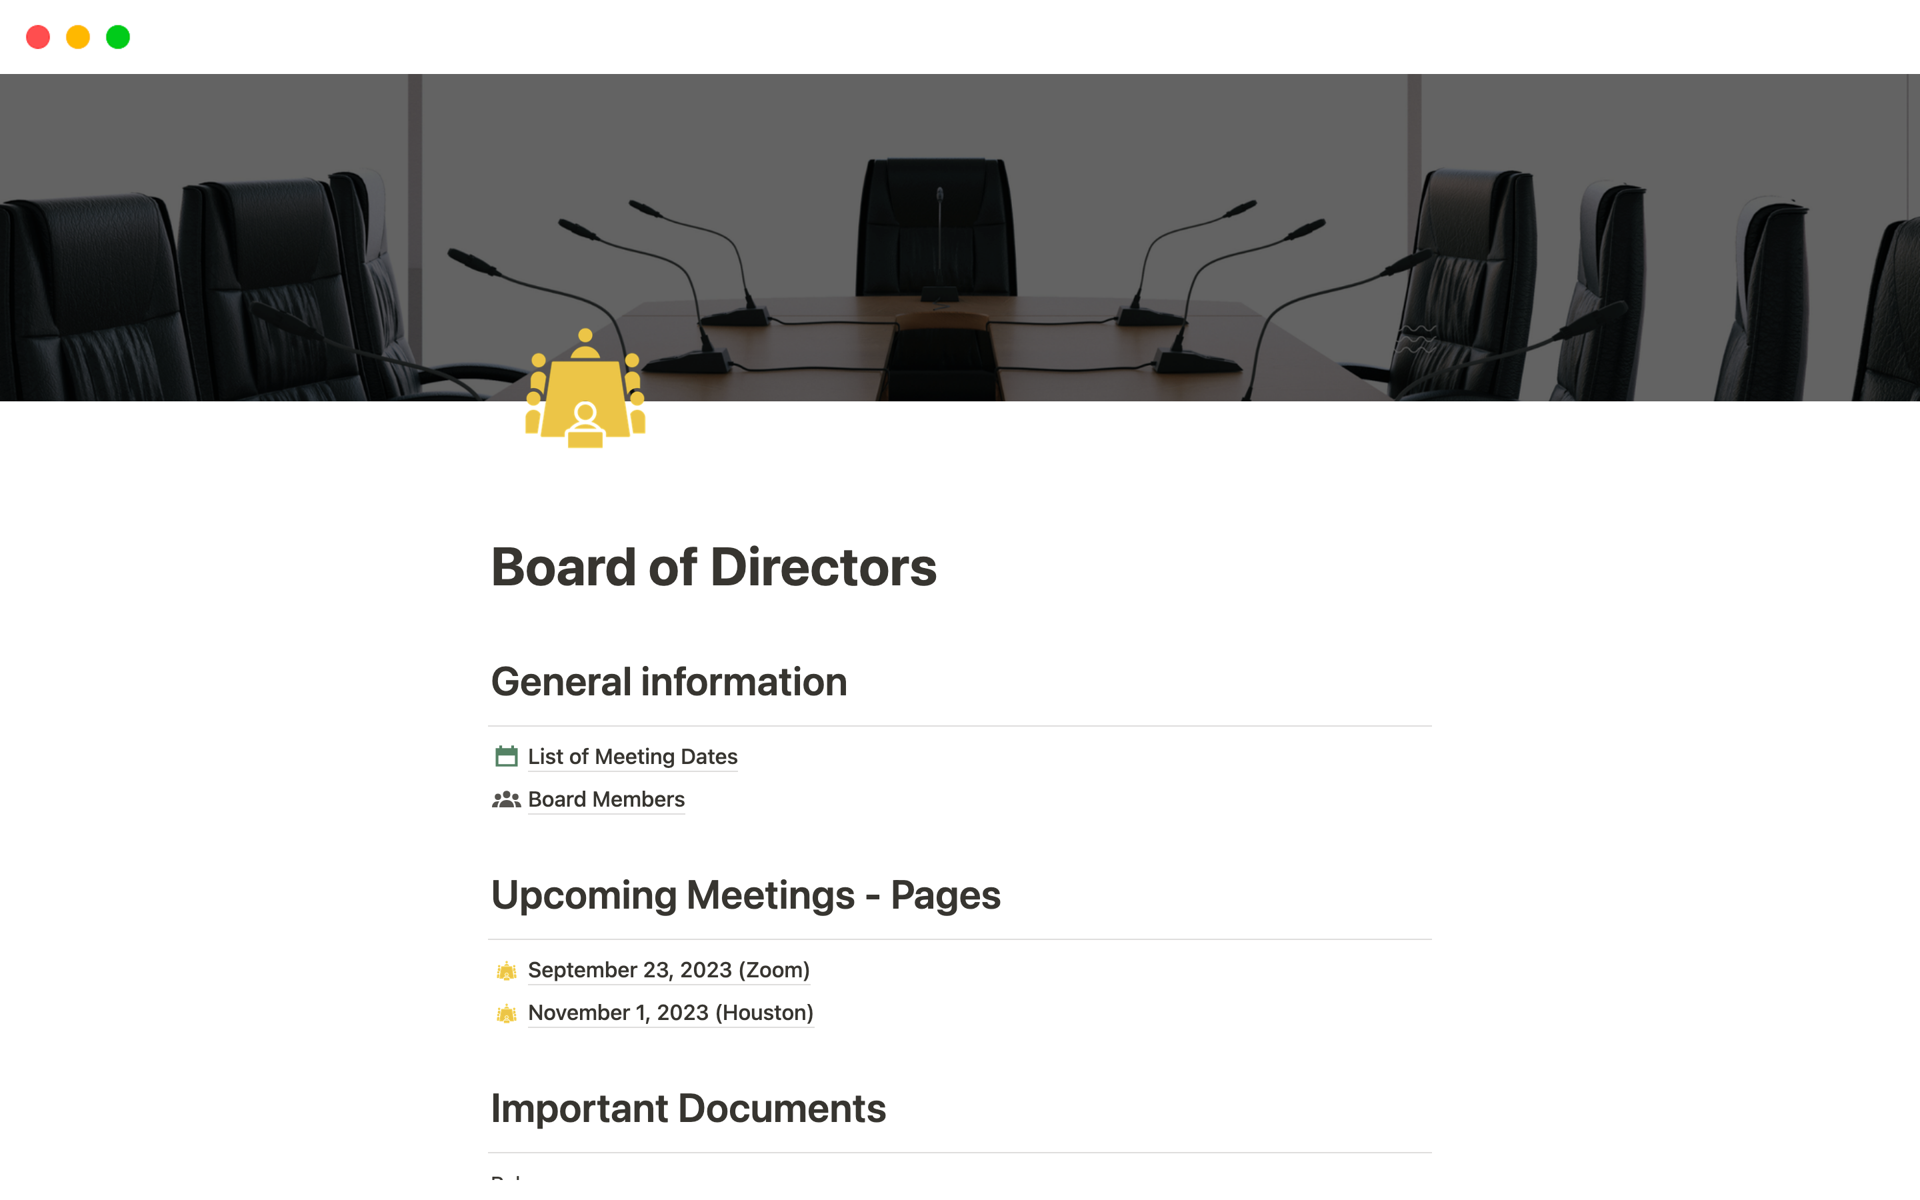 Aperçu du modèle de Board of Directors